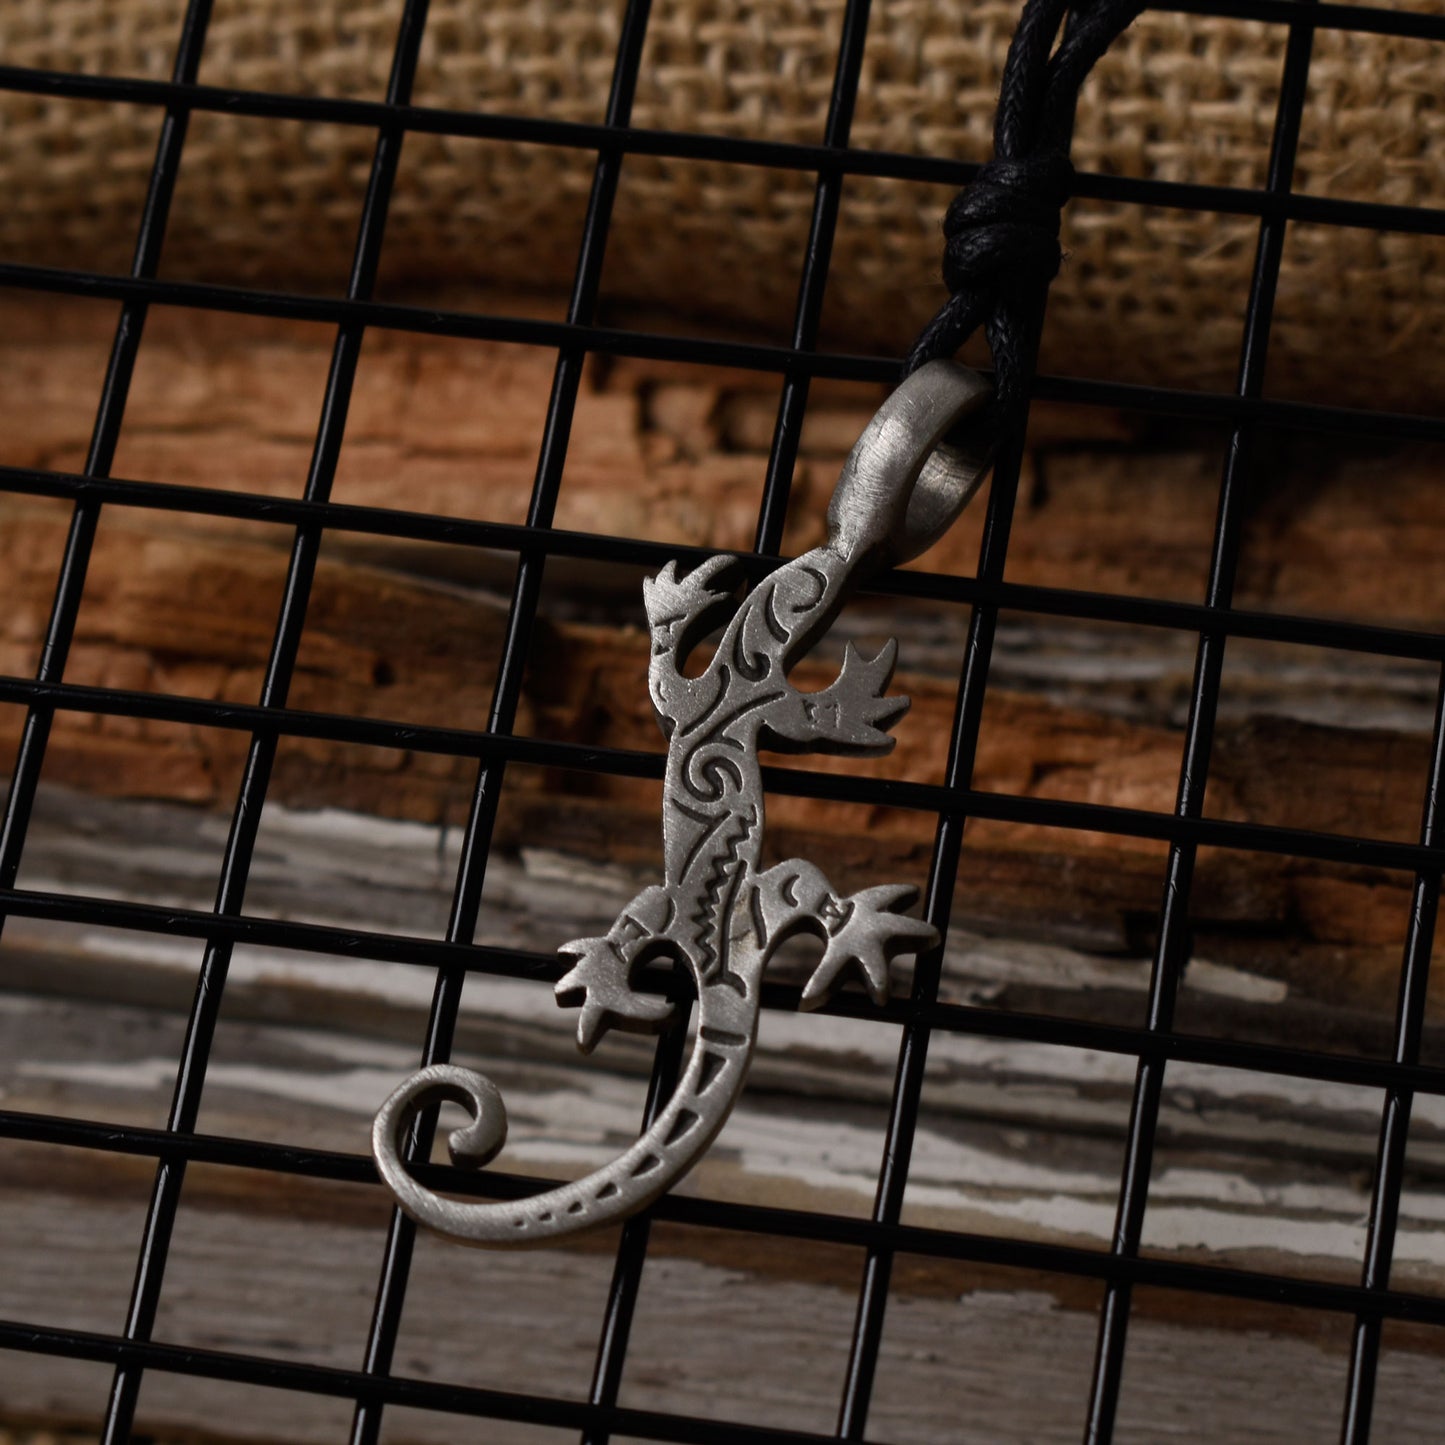 Lizard Gecko Maori Silver Pewter Charm Necklace Pendant Jewelry